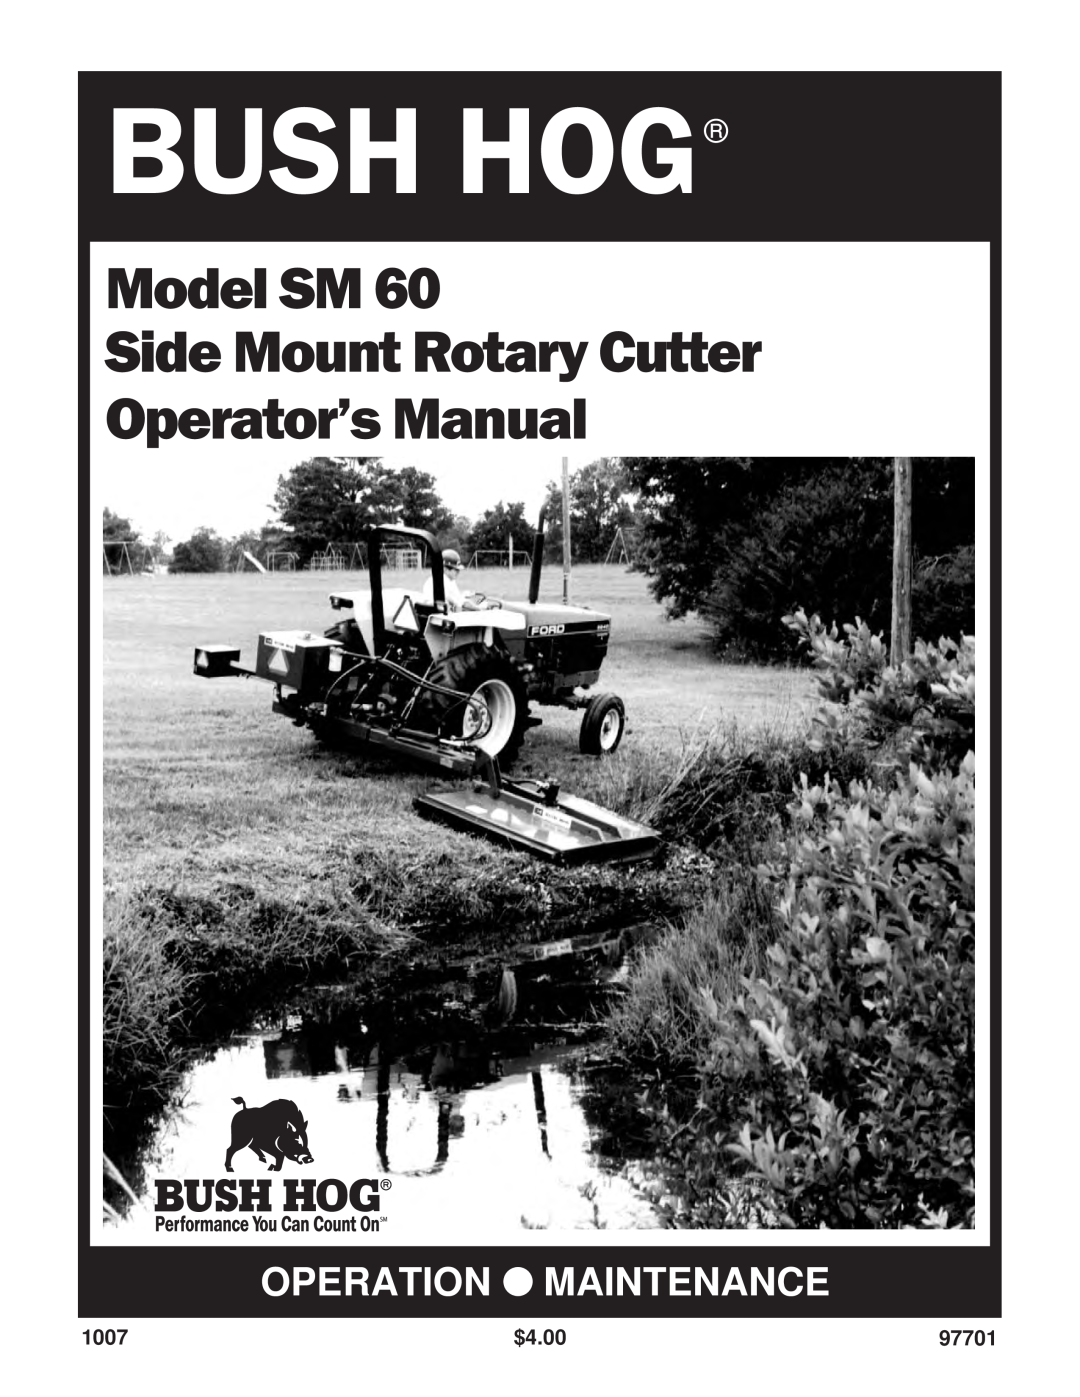 Bush Hog SM 60 manual 1007, $4.00, 97701, Bush Hog, Model SM Side Mount Rotary Cutter, Operator’s Manual 